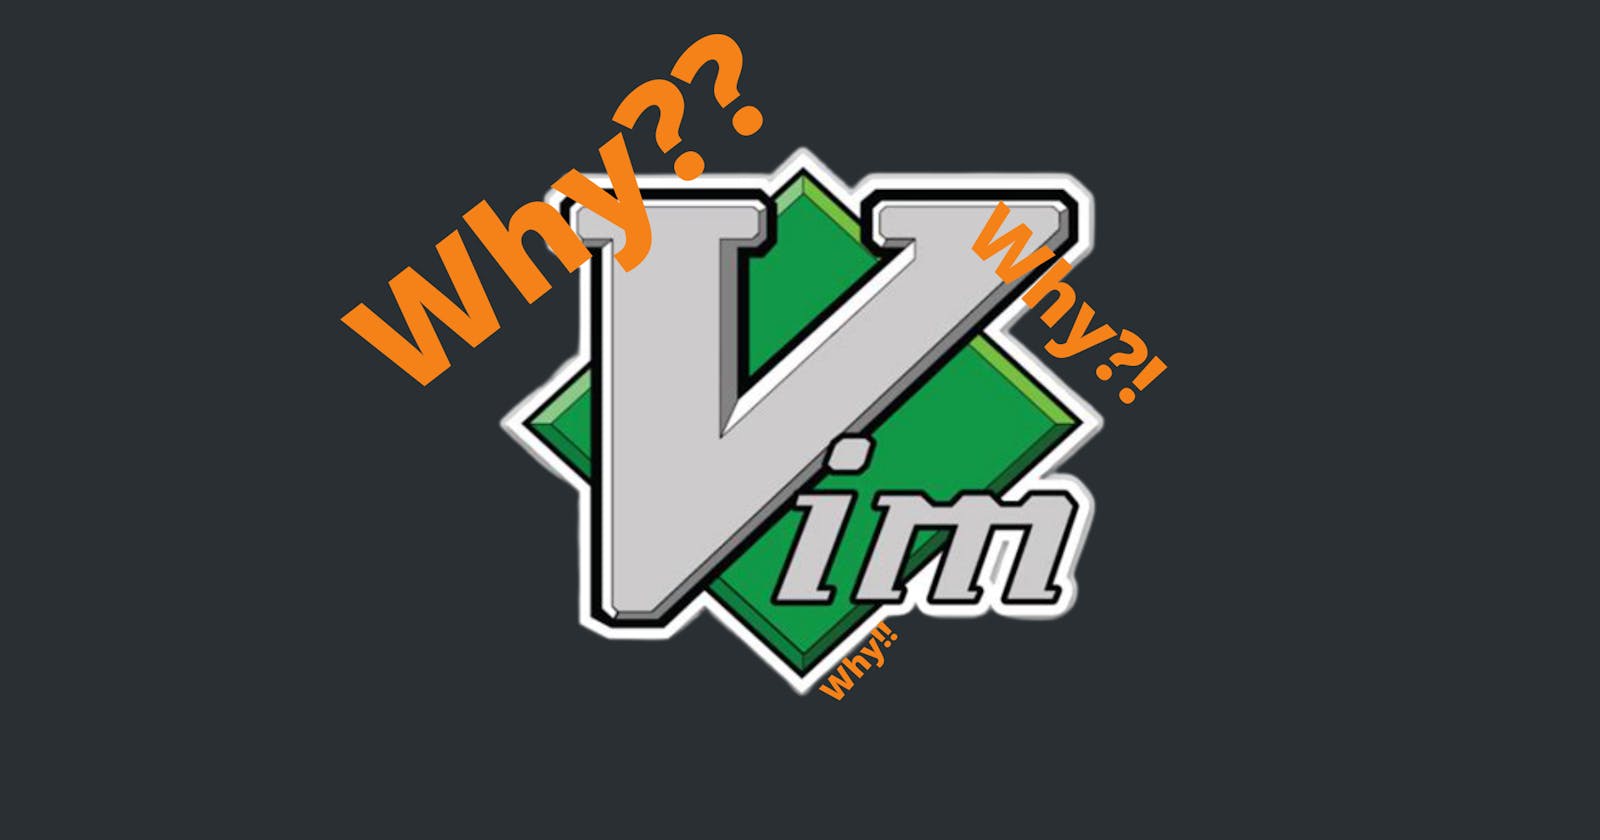 Why use Vim?